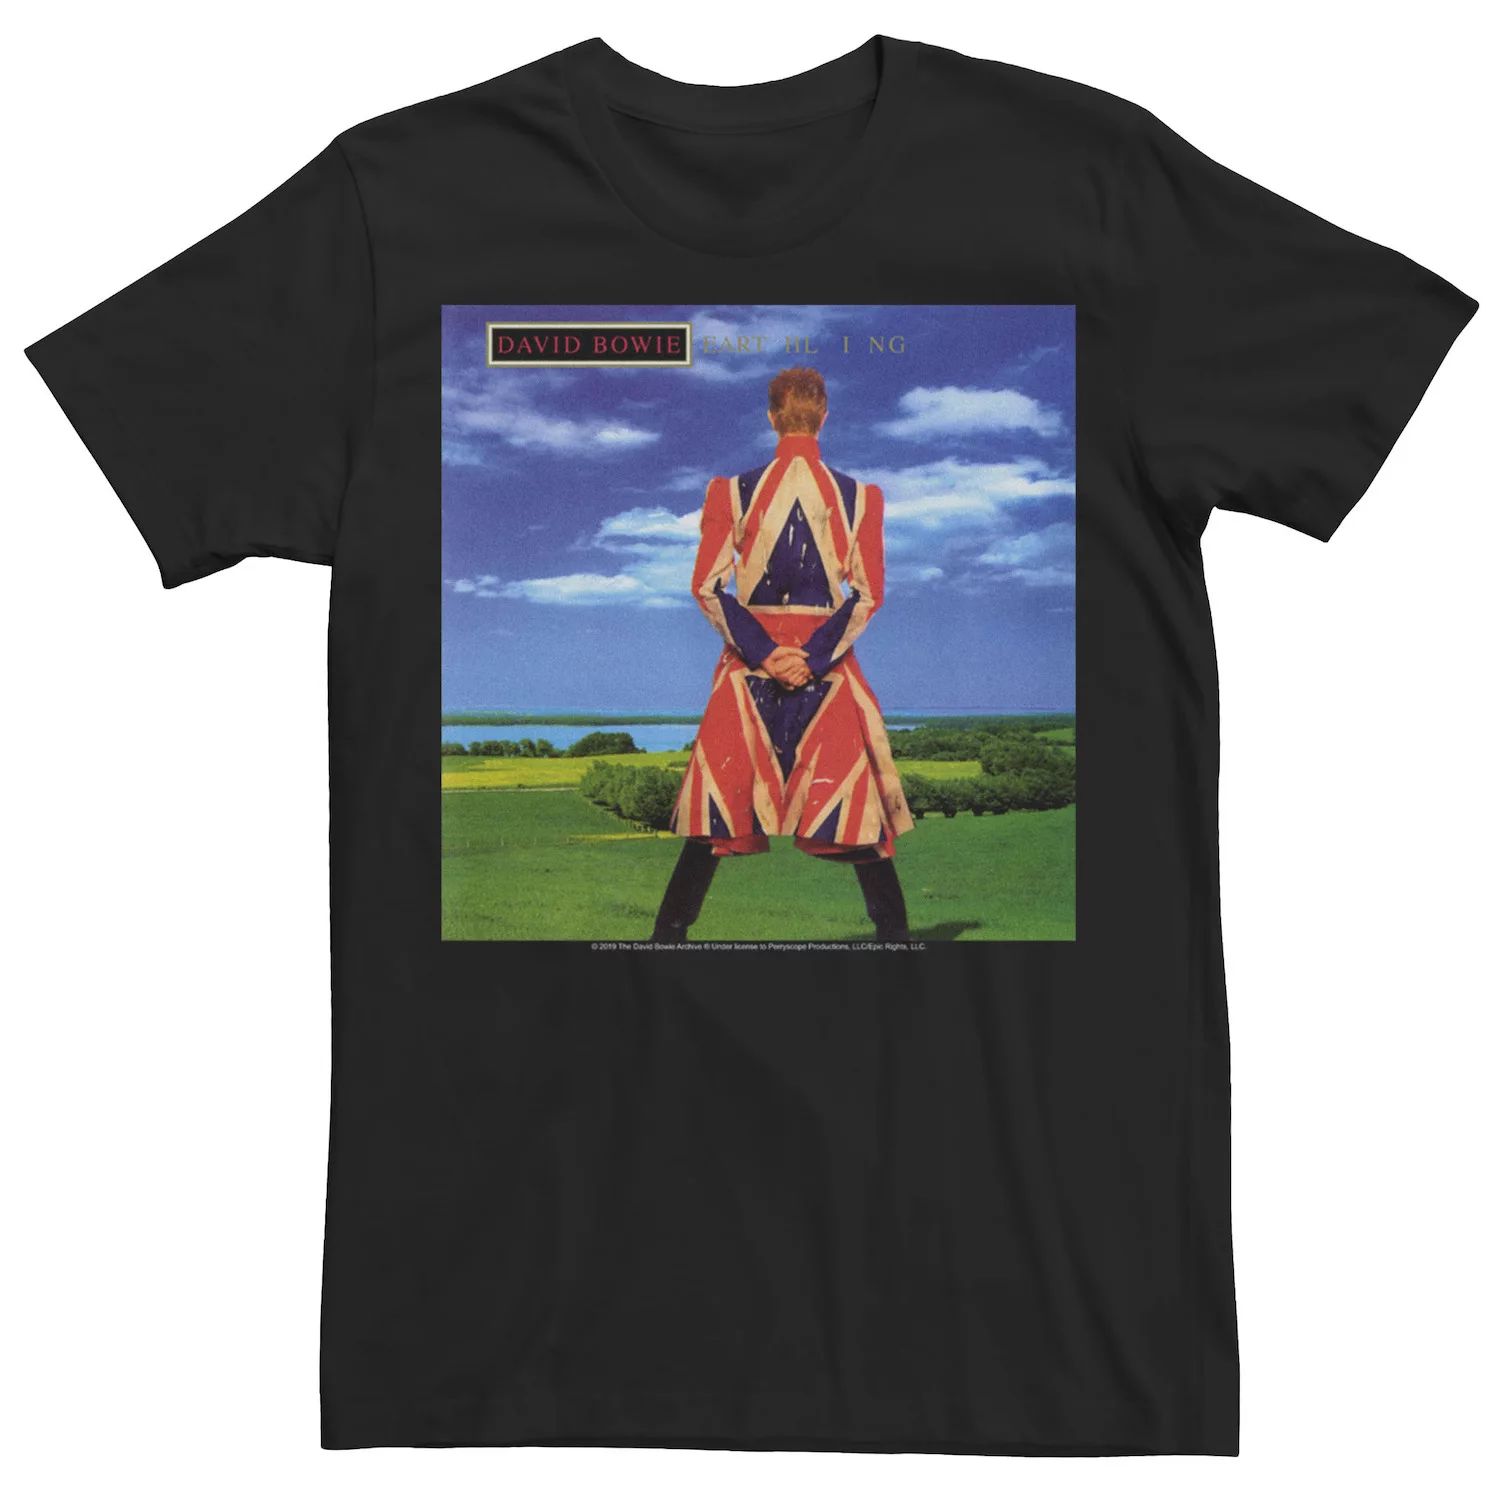 Мужская футболка с рисунком David Bowies Bowie Earthling Licensed Character